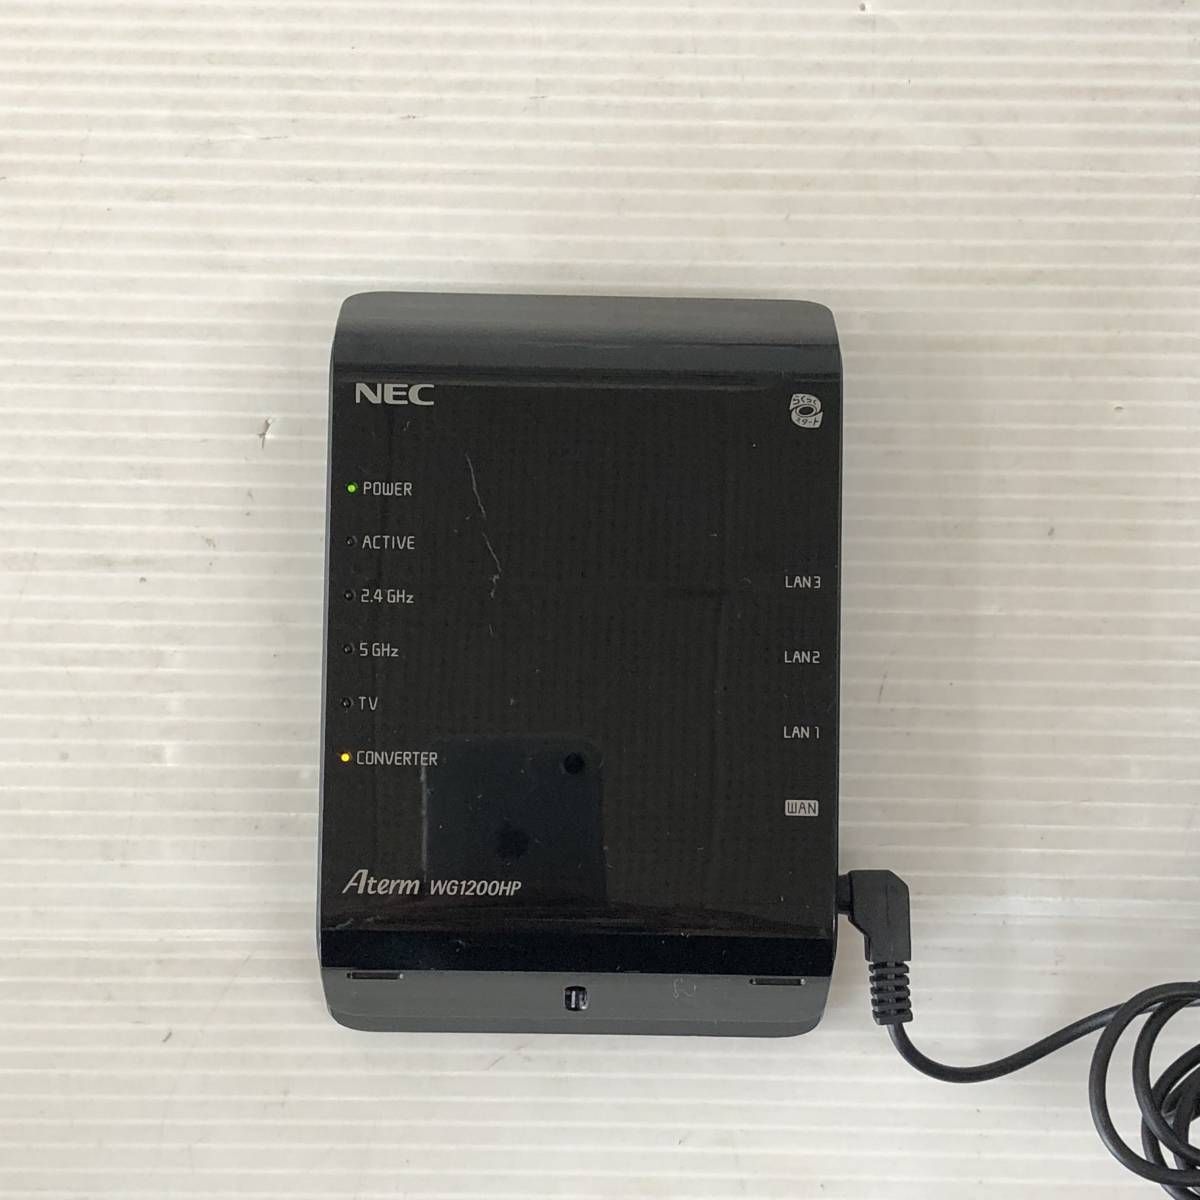 NEC/エヌイーシー Aterm（エーターム） WG1200HP PA-WG1200HP 無線LANルーター